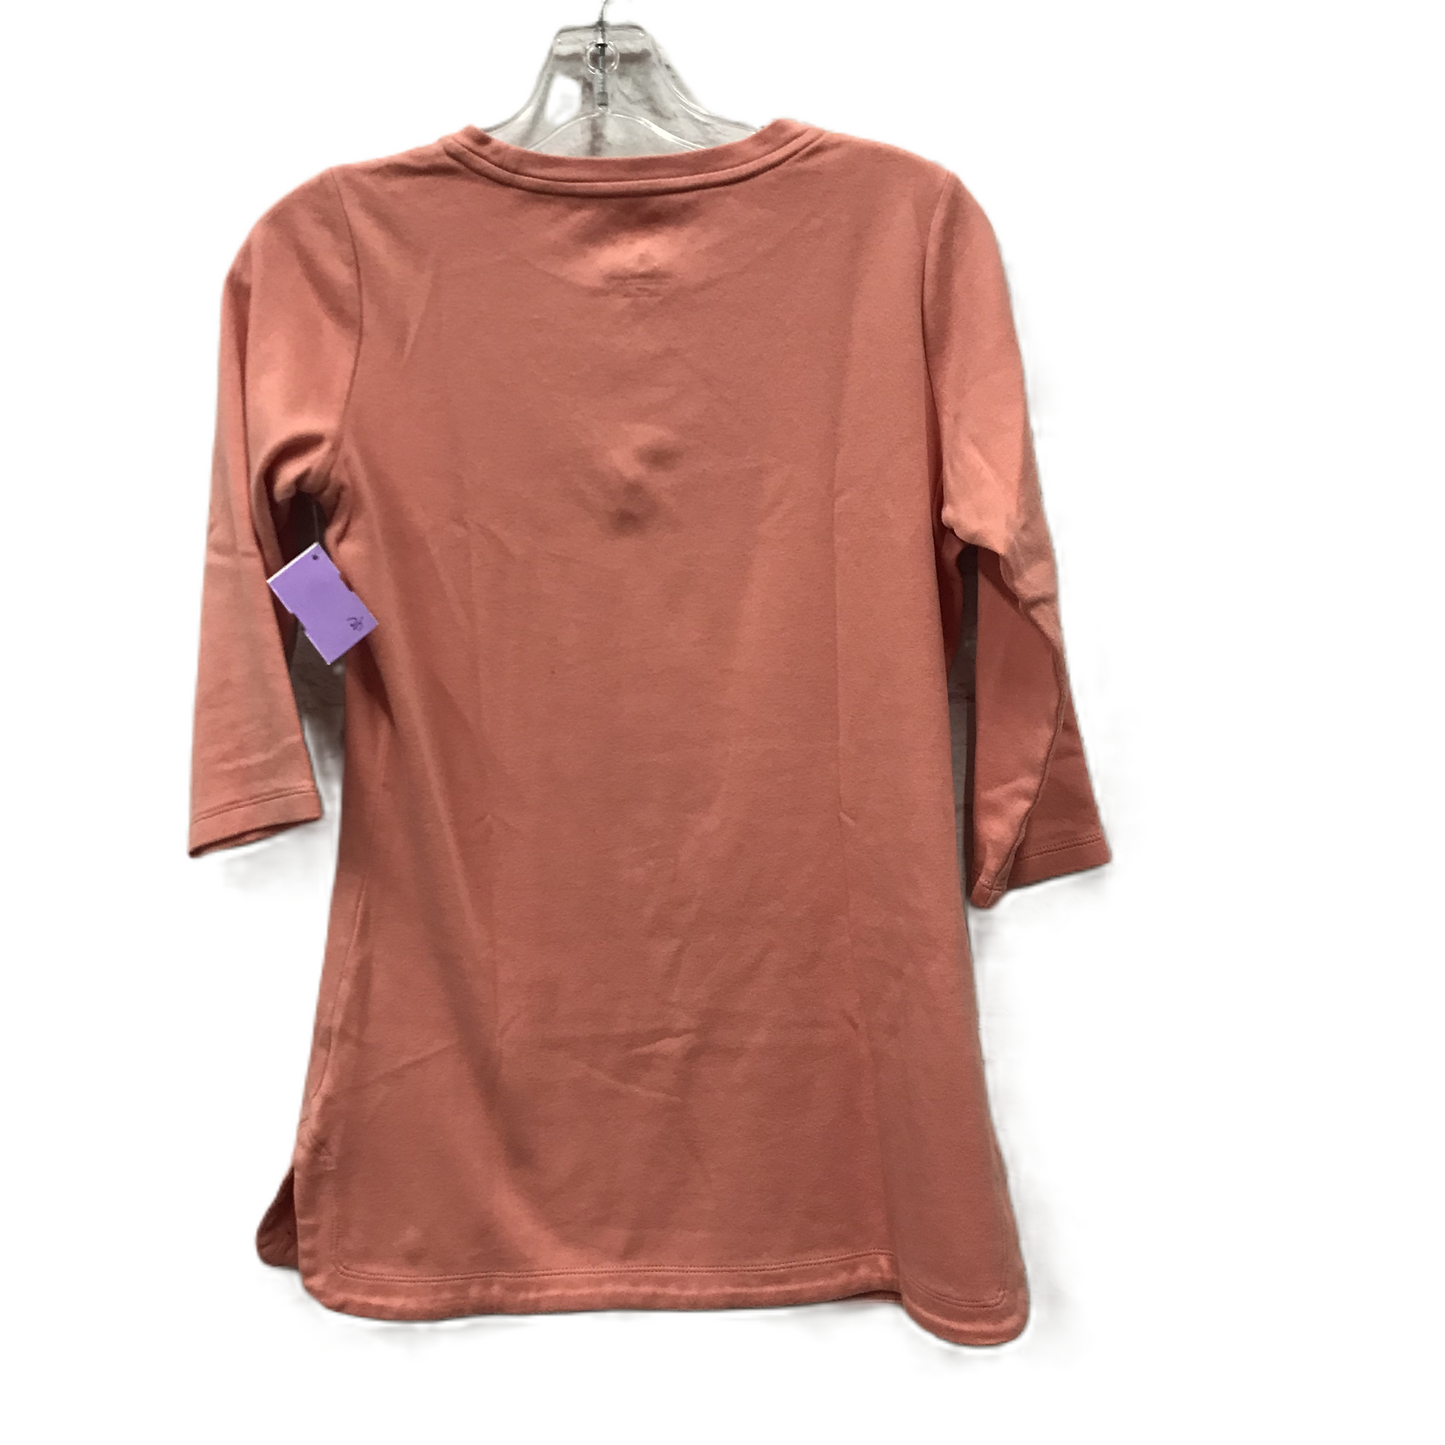 Orange Top Long Sleeve Basic By Isaac Mizrahi Live Qvc, Size: Xxs